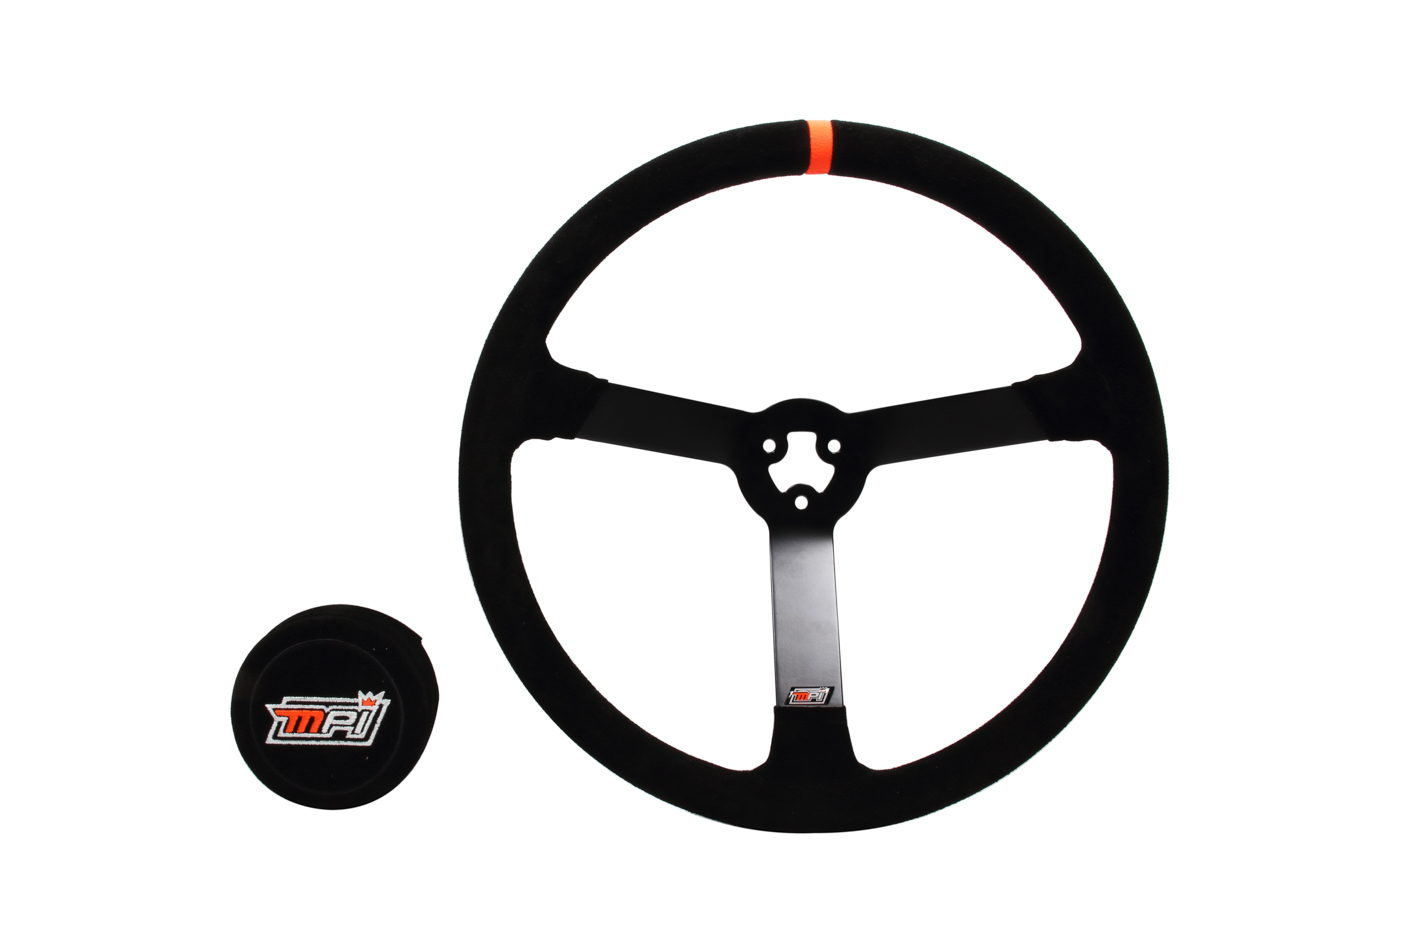 MPI USA MPI-LM-15 Steering Wheel, Late Model, 15 in Diameter, 3-1/4 in Dish, 3-Spoke, Black Suede Grip, Orange Stripe, Steel, Black Powder Coat, Each